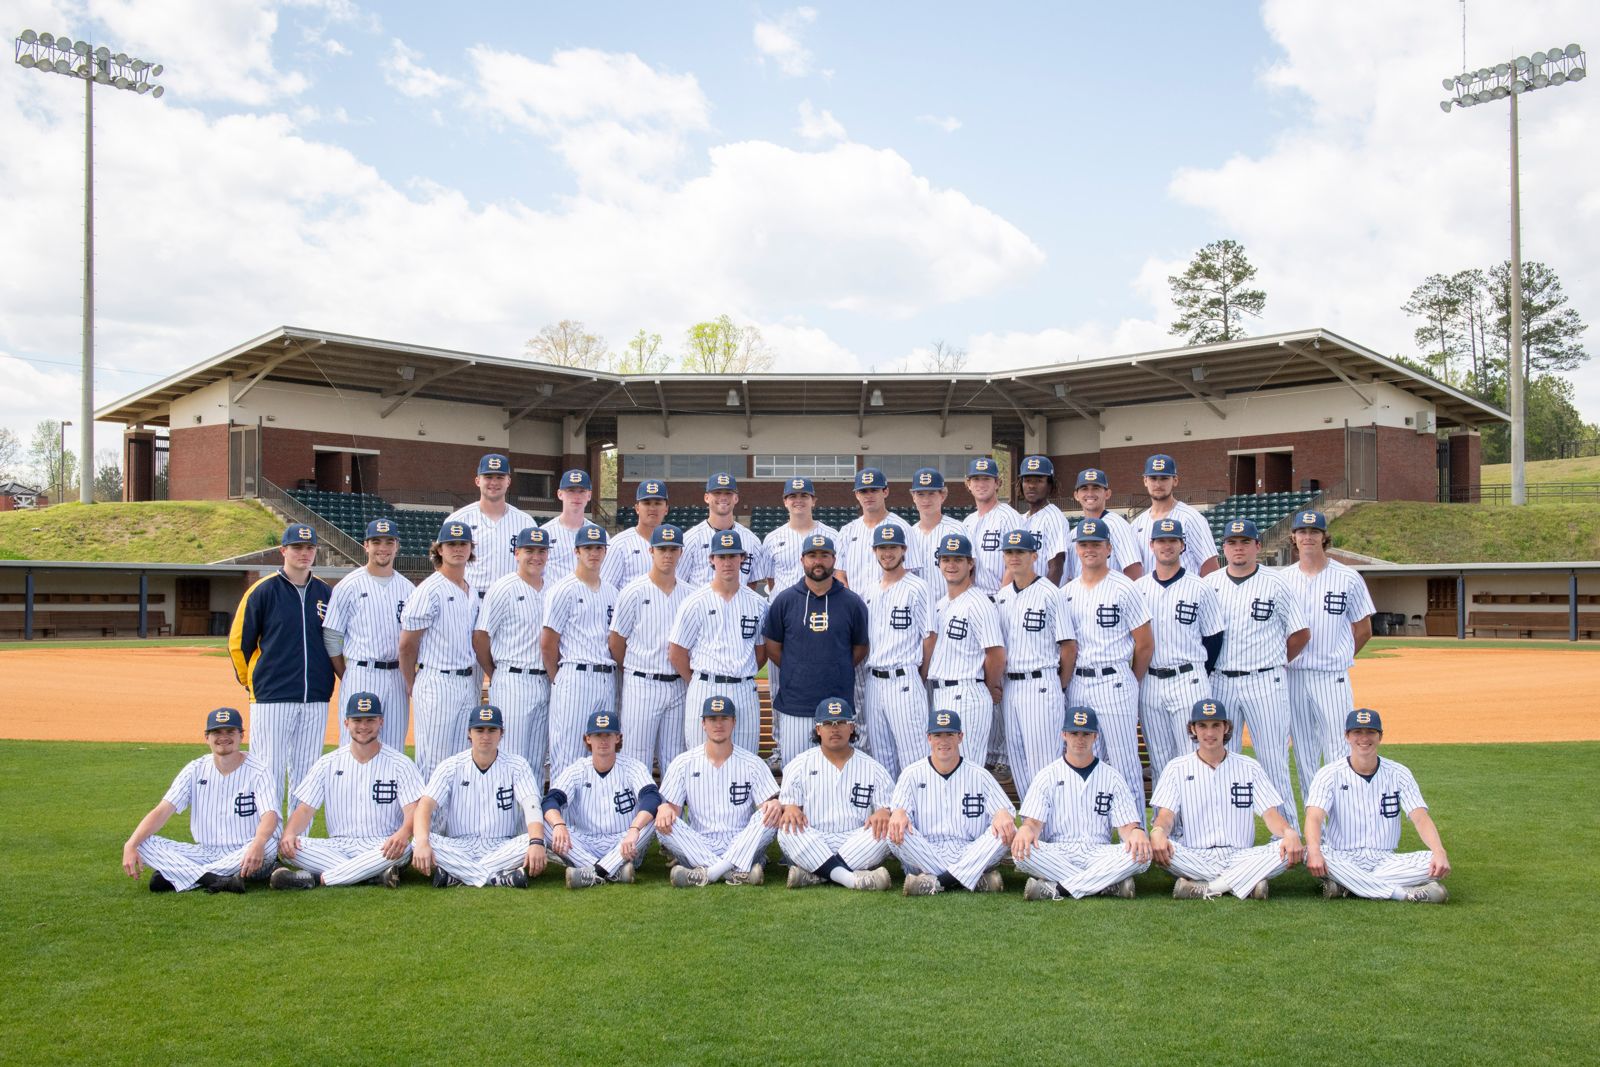 suscc baseball team posing for a photograph as a team on a baseball field